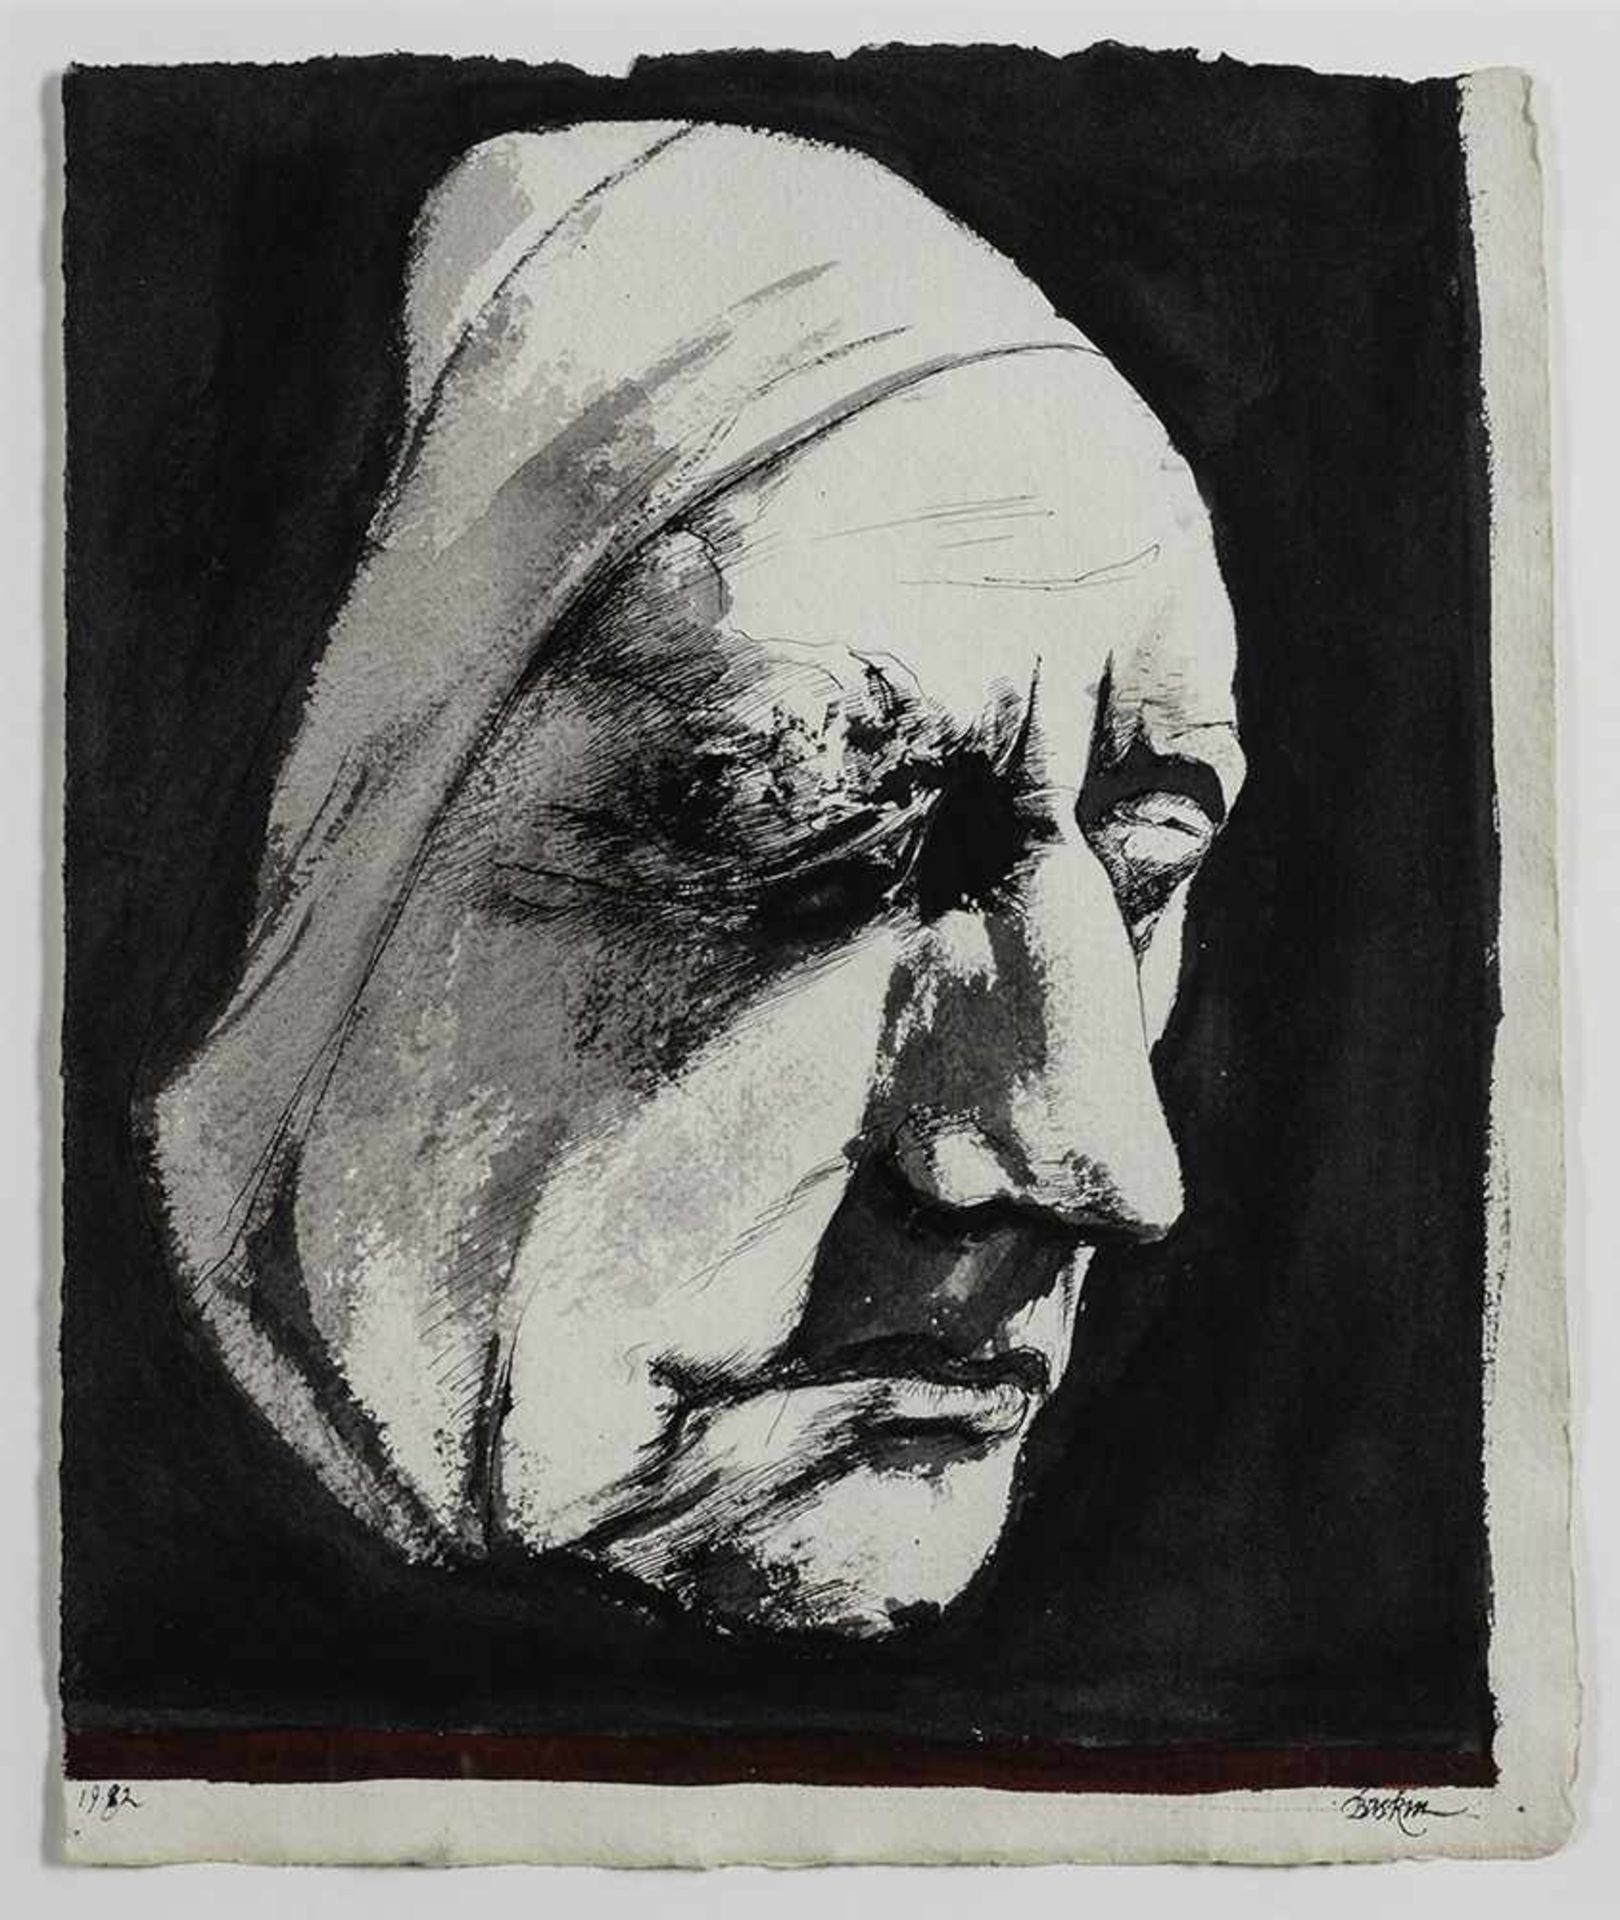 Baskin, LeonardNew Brunswick, 1922 - Northampton, 200031 x 26 cm, R.Totenmaske, 1982. Rote und